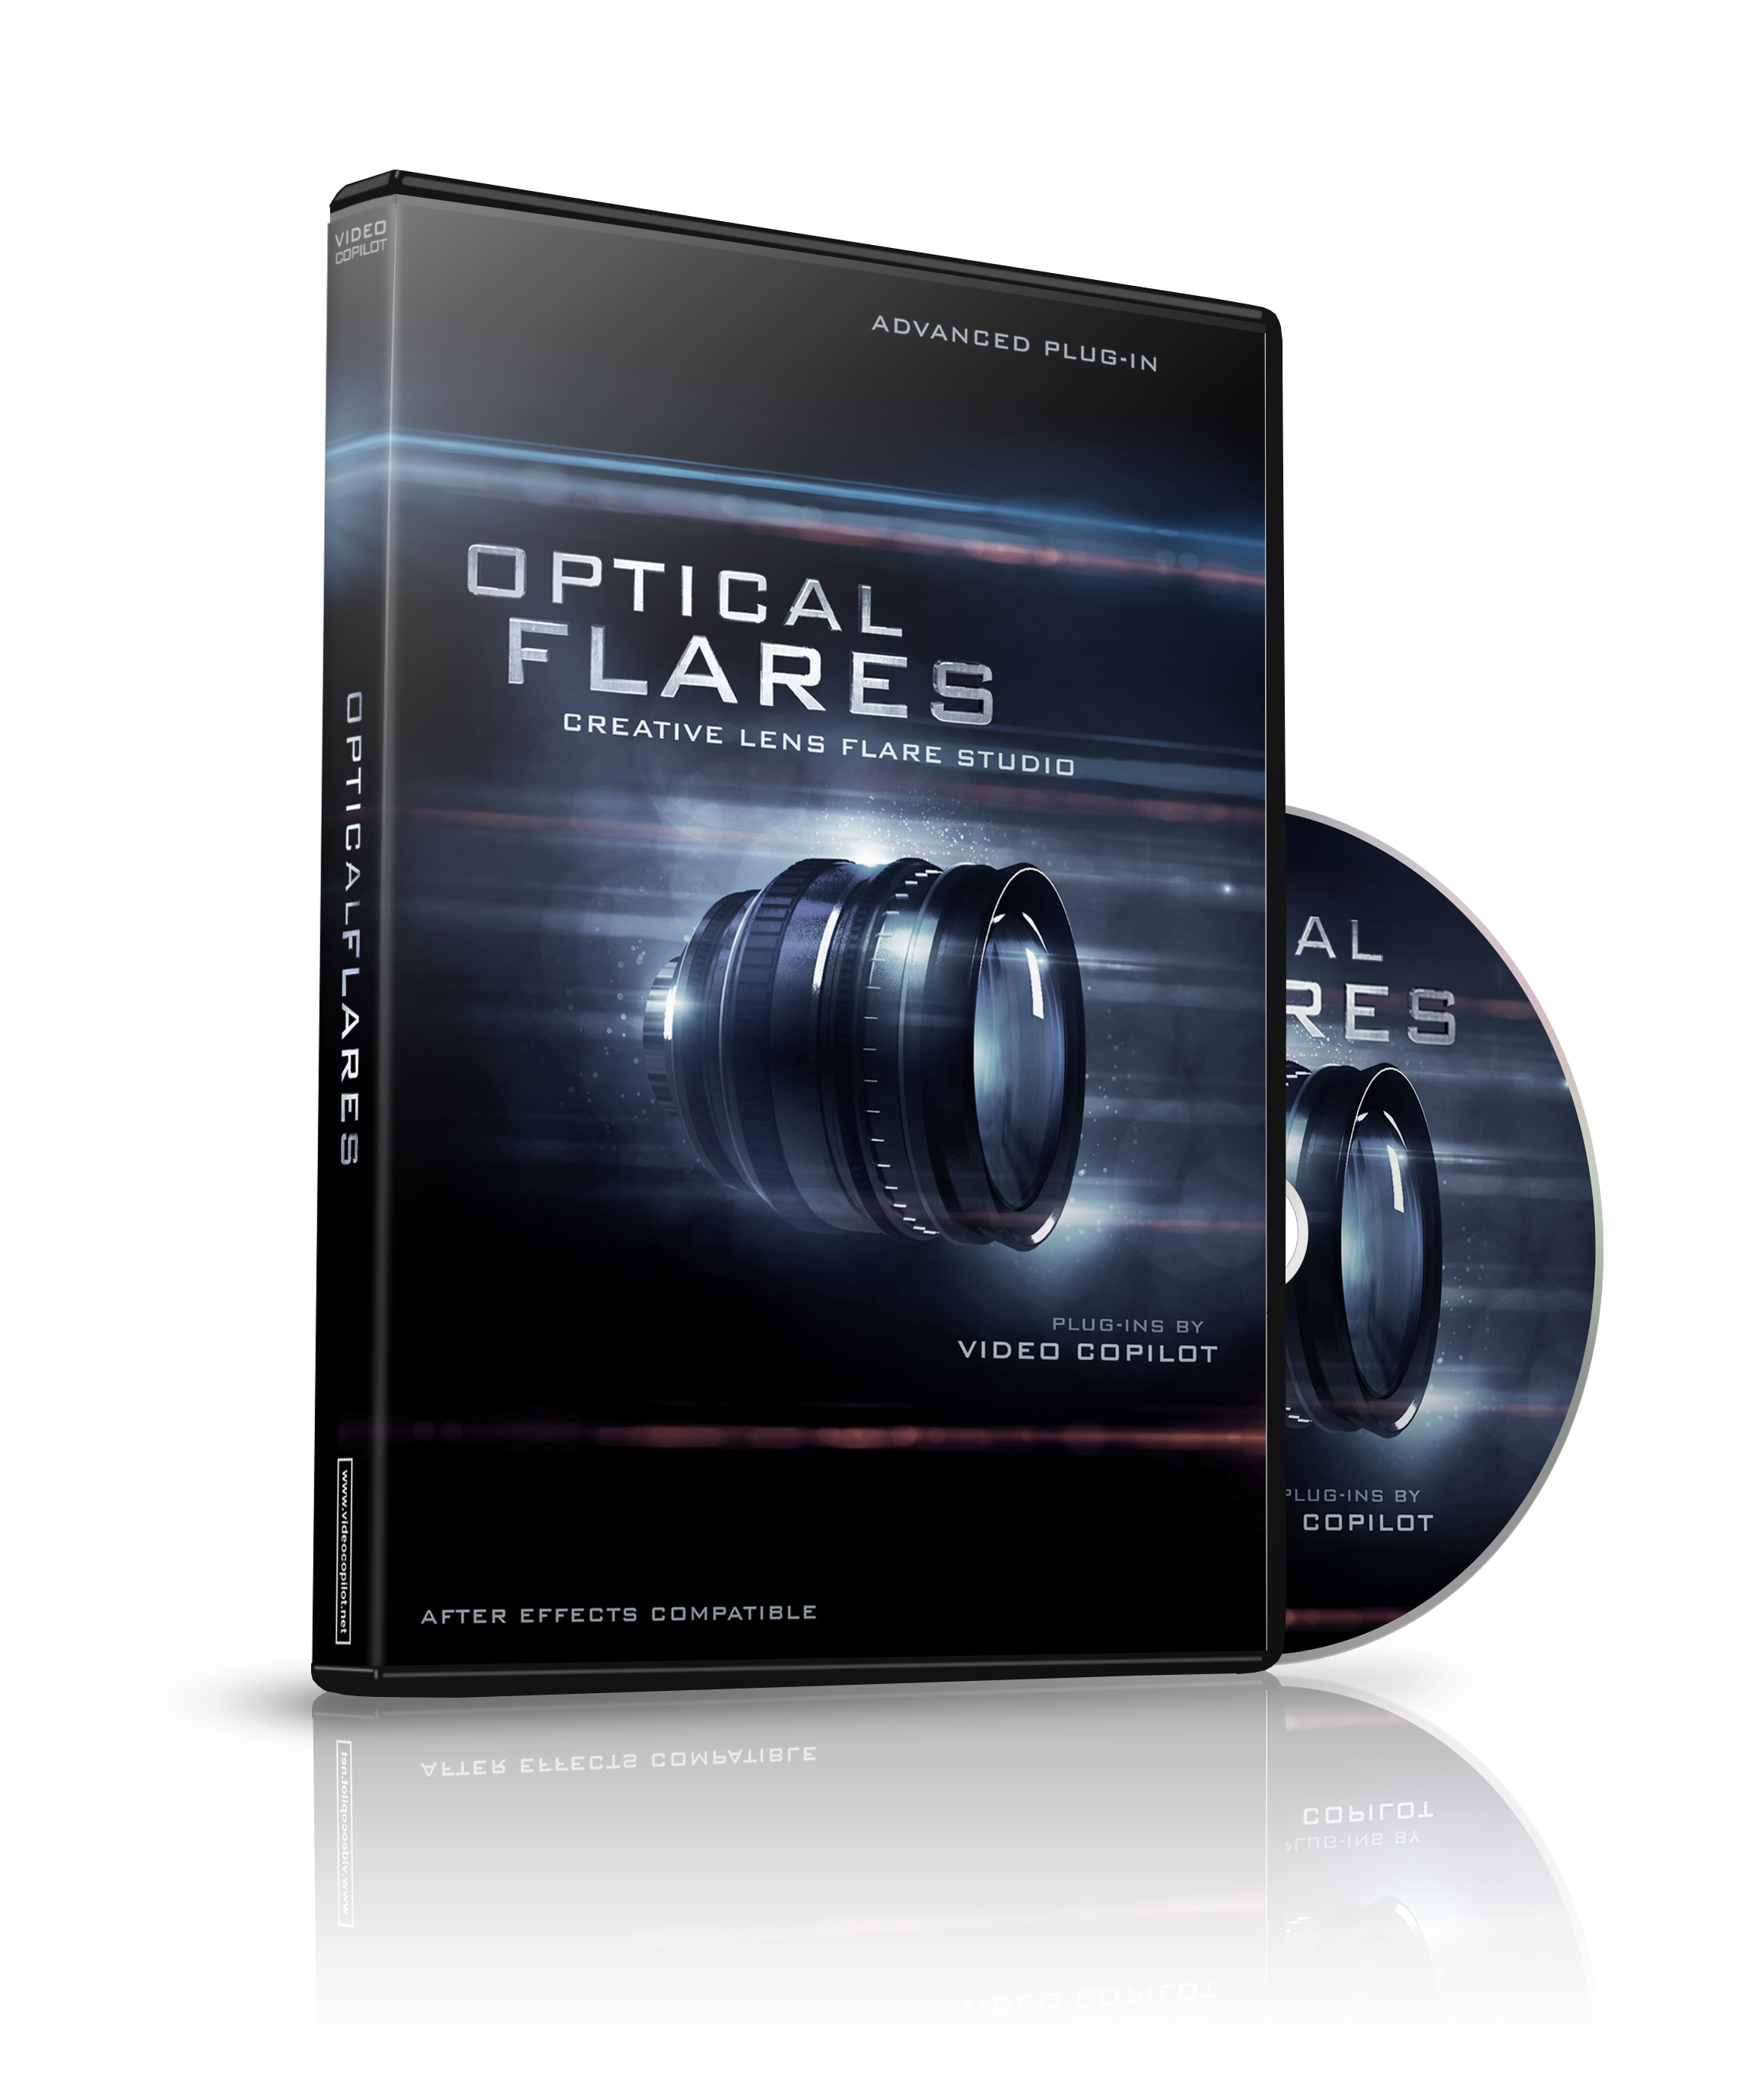  Video Copilot Optical Flares 1.3.5 Pro Flares Bundle